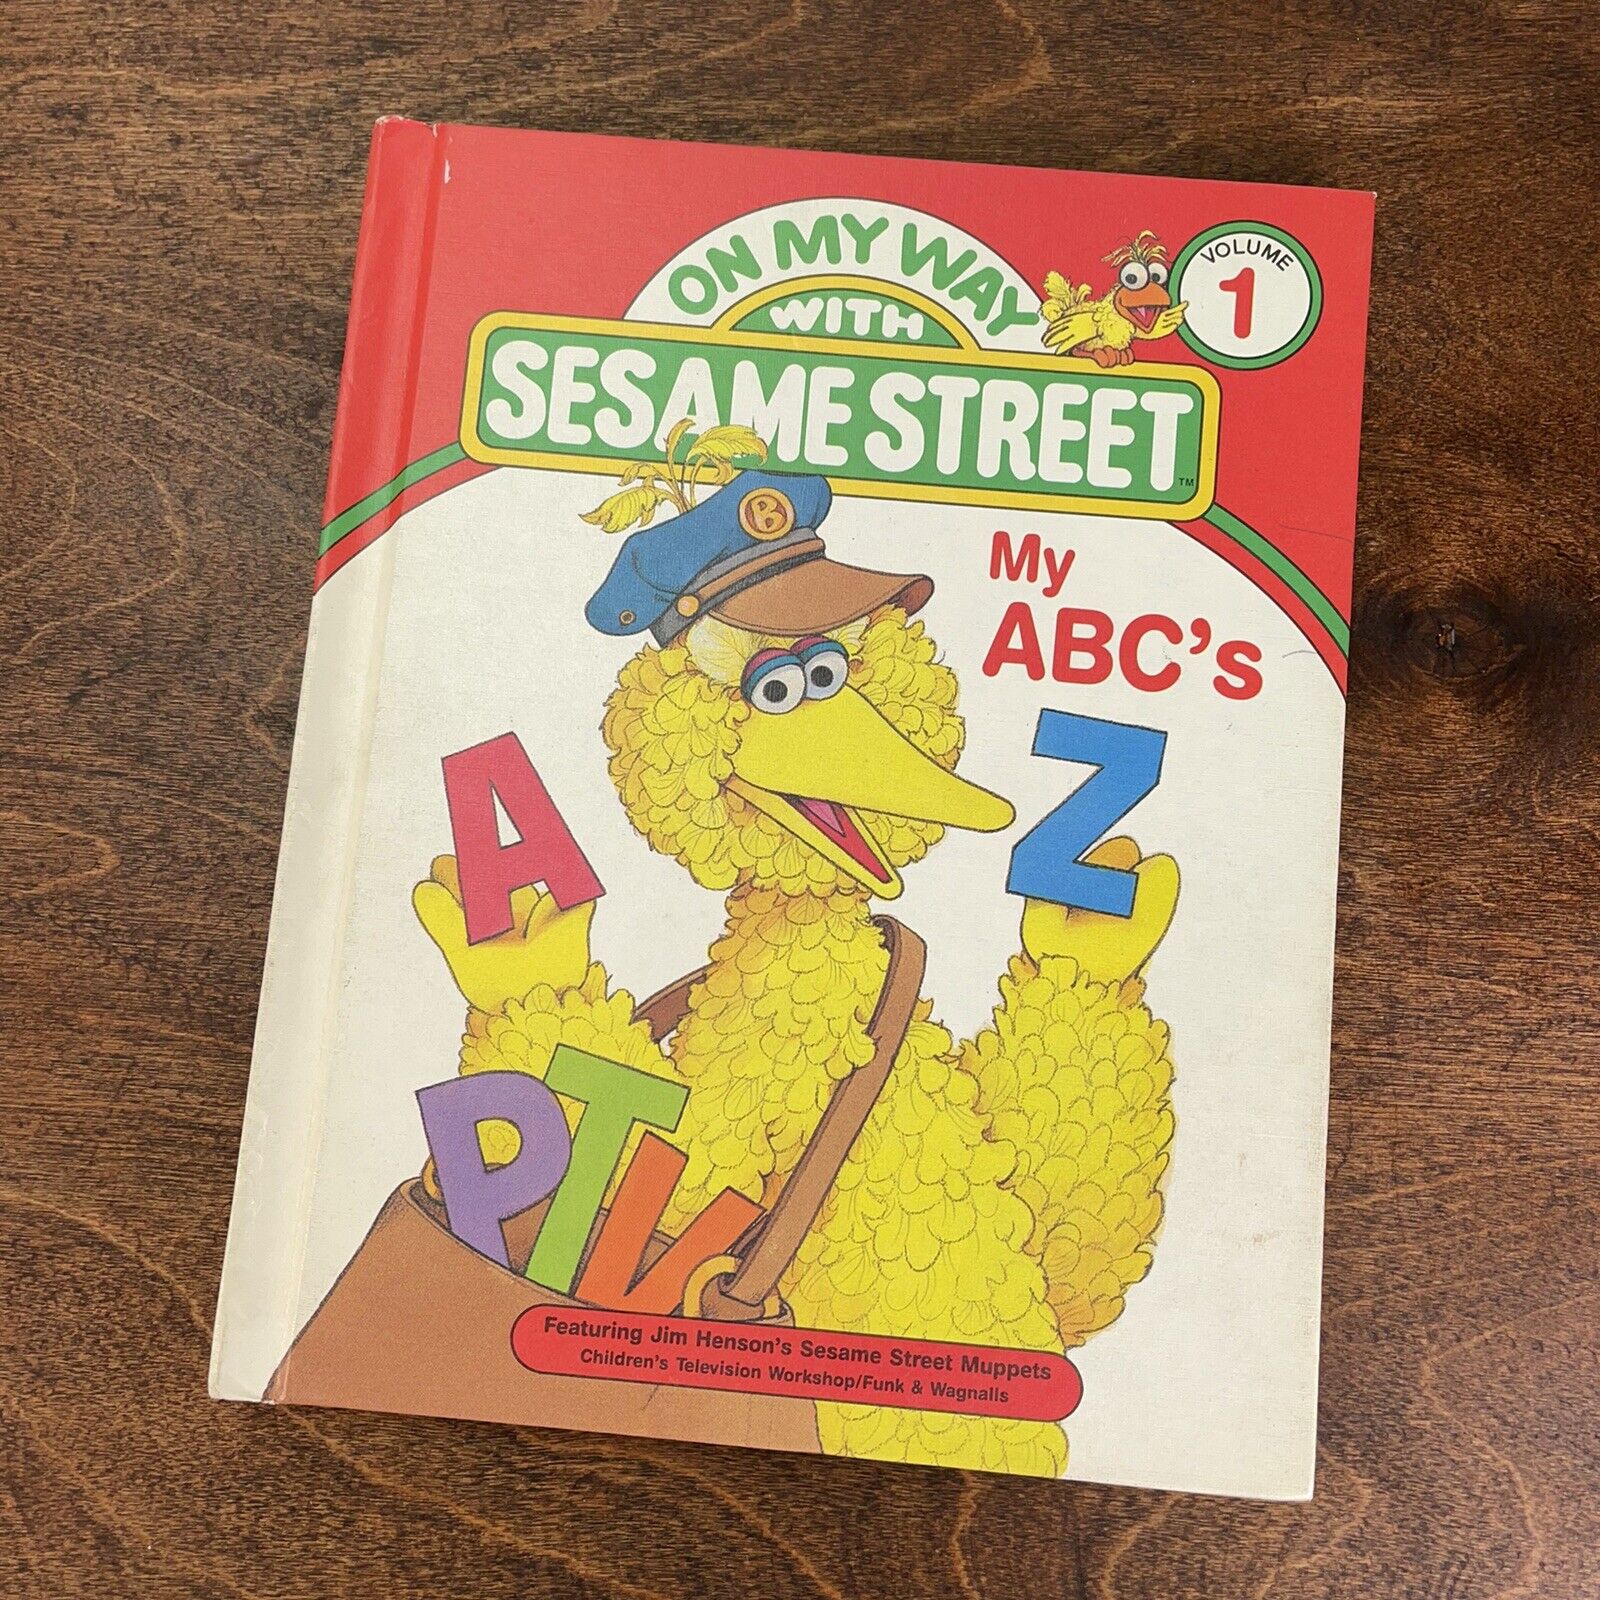 1989 On My Way With Sesame Street Volume 1 MY ABC'S HARDBACK BOOK Big Bird Oscar